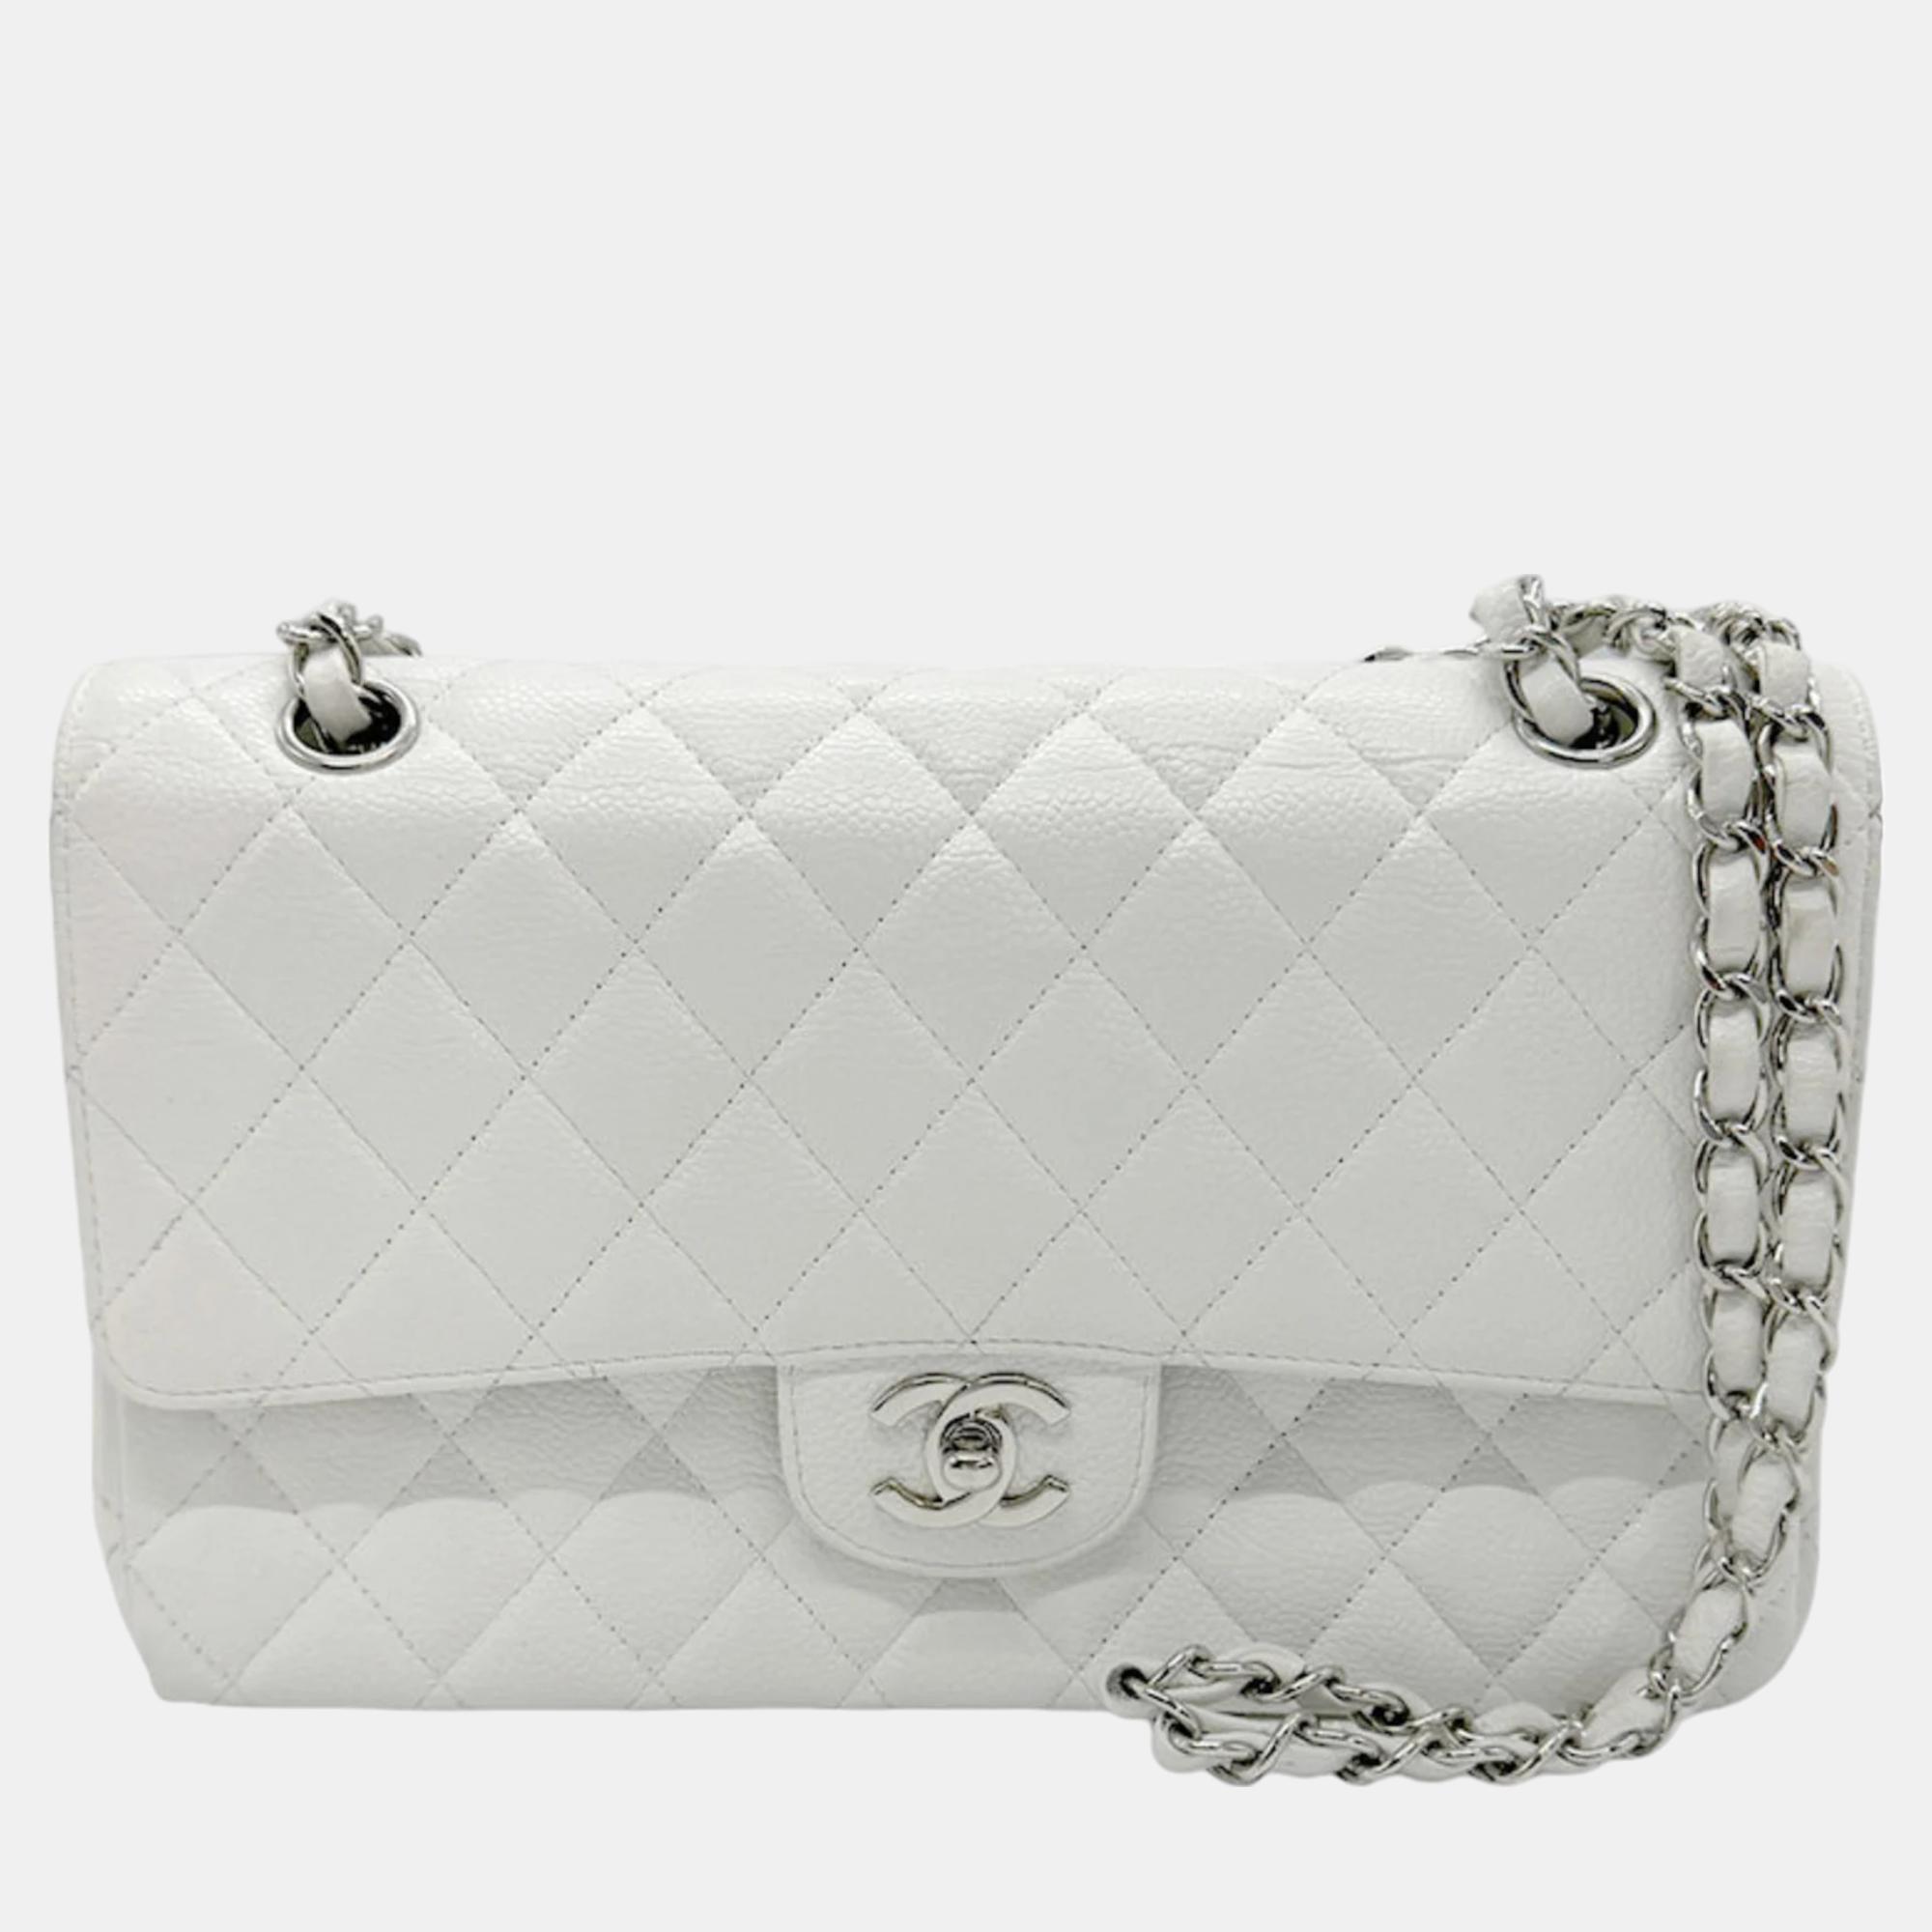 Chanel white caviar leather medium classic double flap shoulder bag